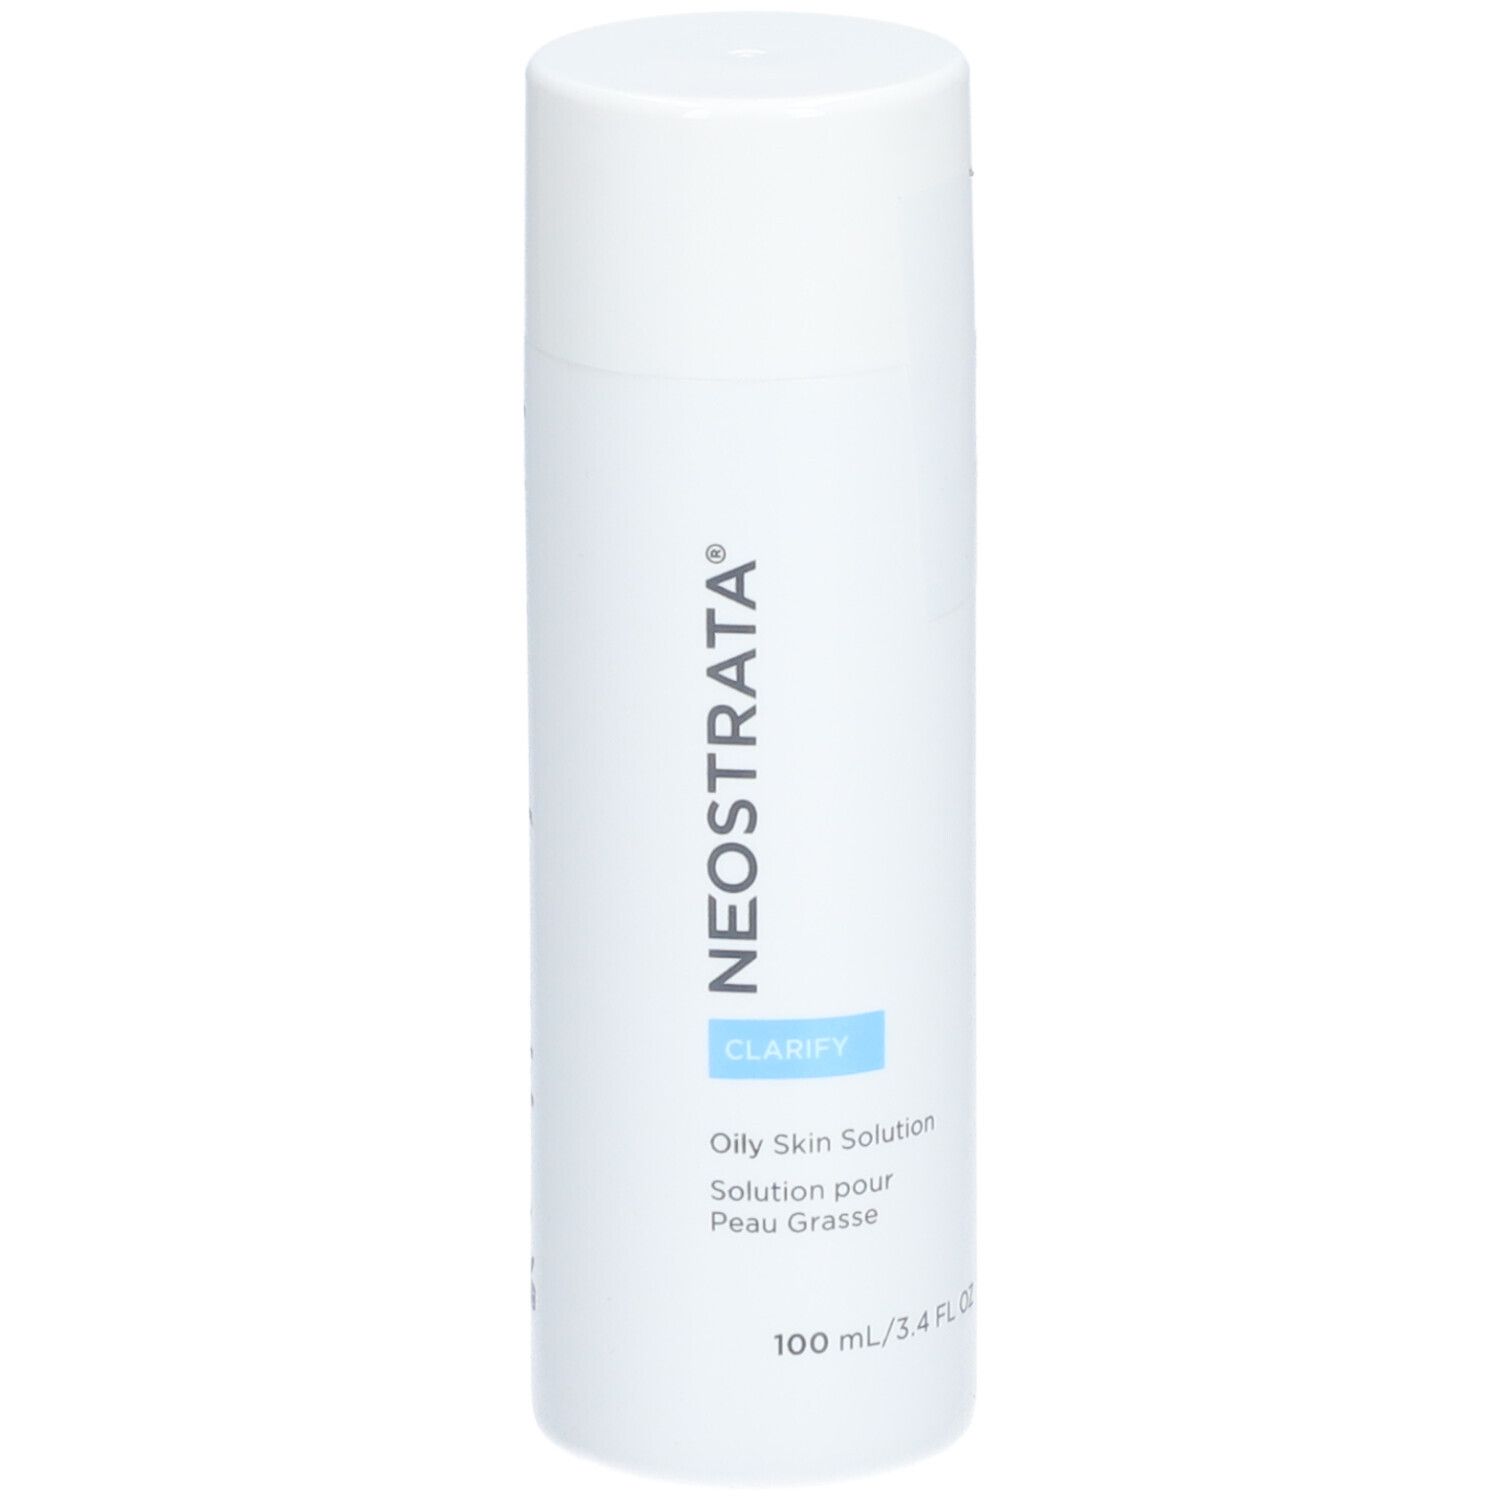 NeoStrata® Clarify Oily Skin Solution 8 AHA